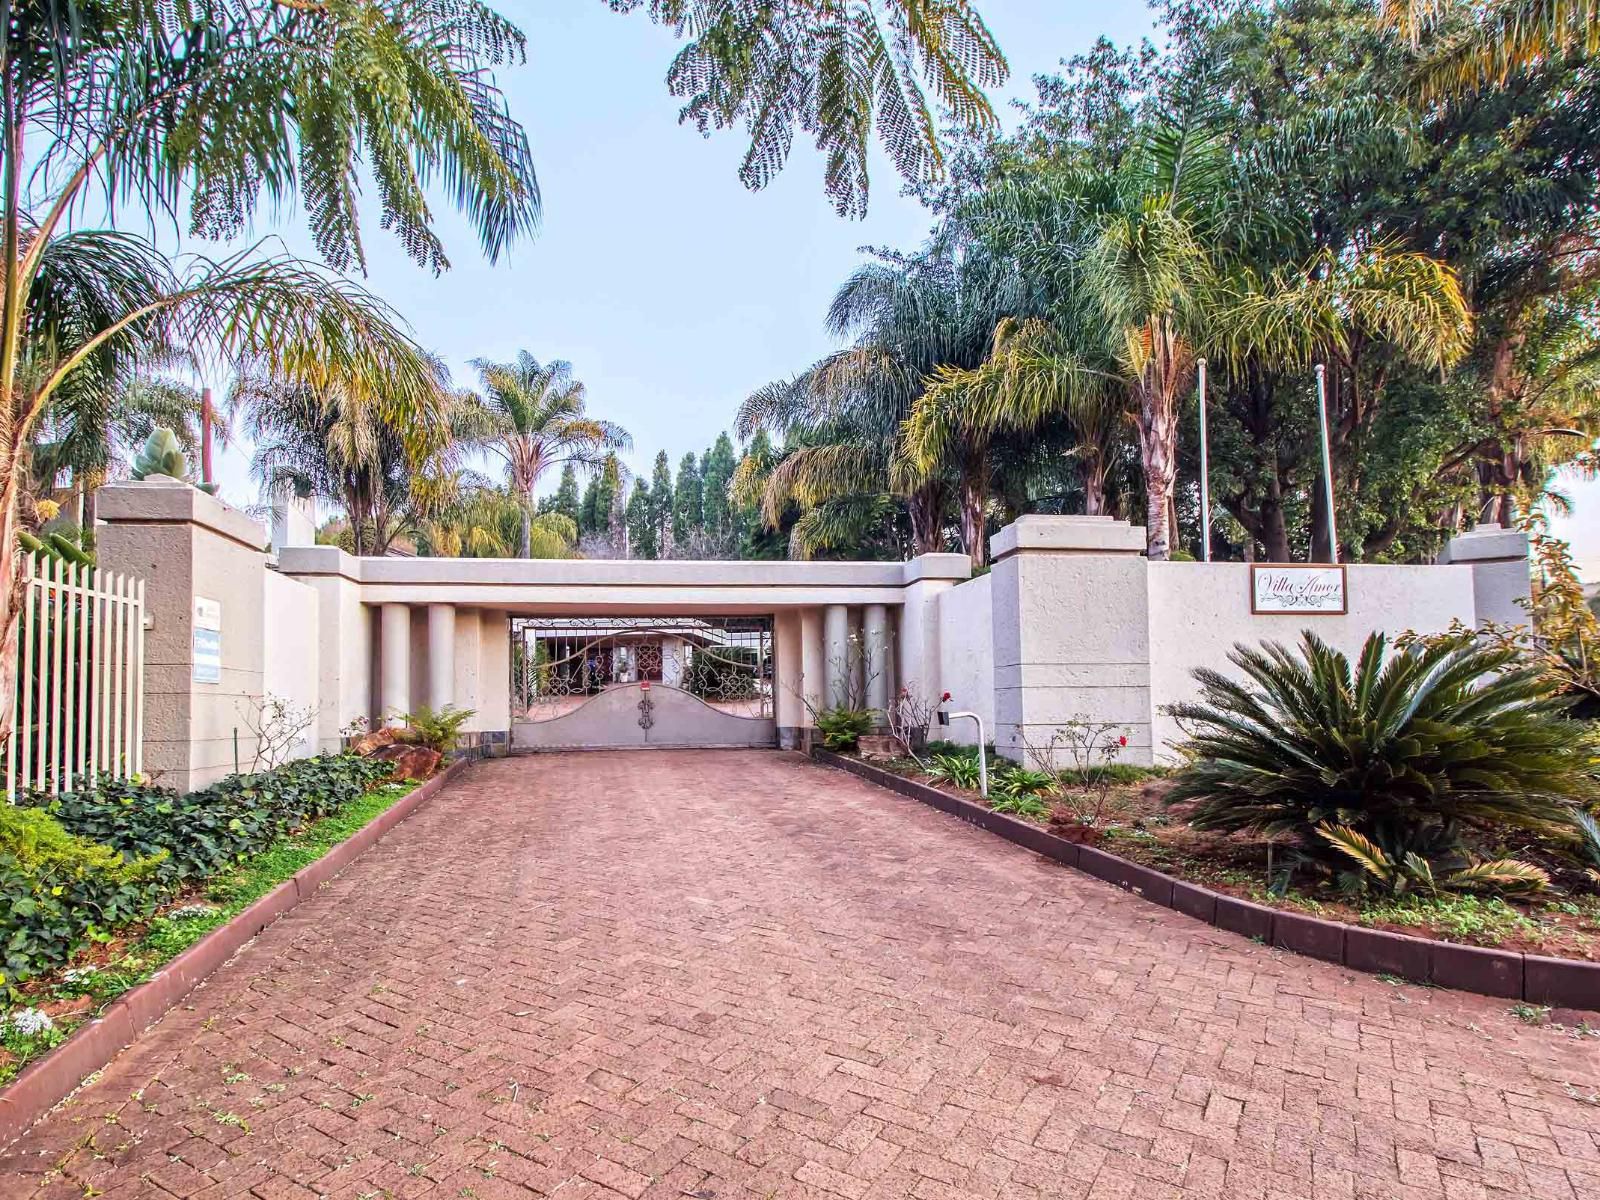 Villa Amor Shere Pretoria Tshwane Gauteng South Africa House, Building, Architecture, Palm Tree, Plant, Nature, Wood, Garden